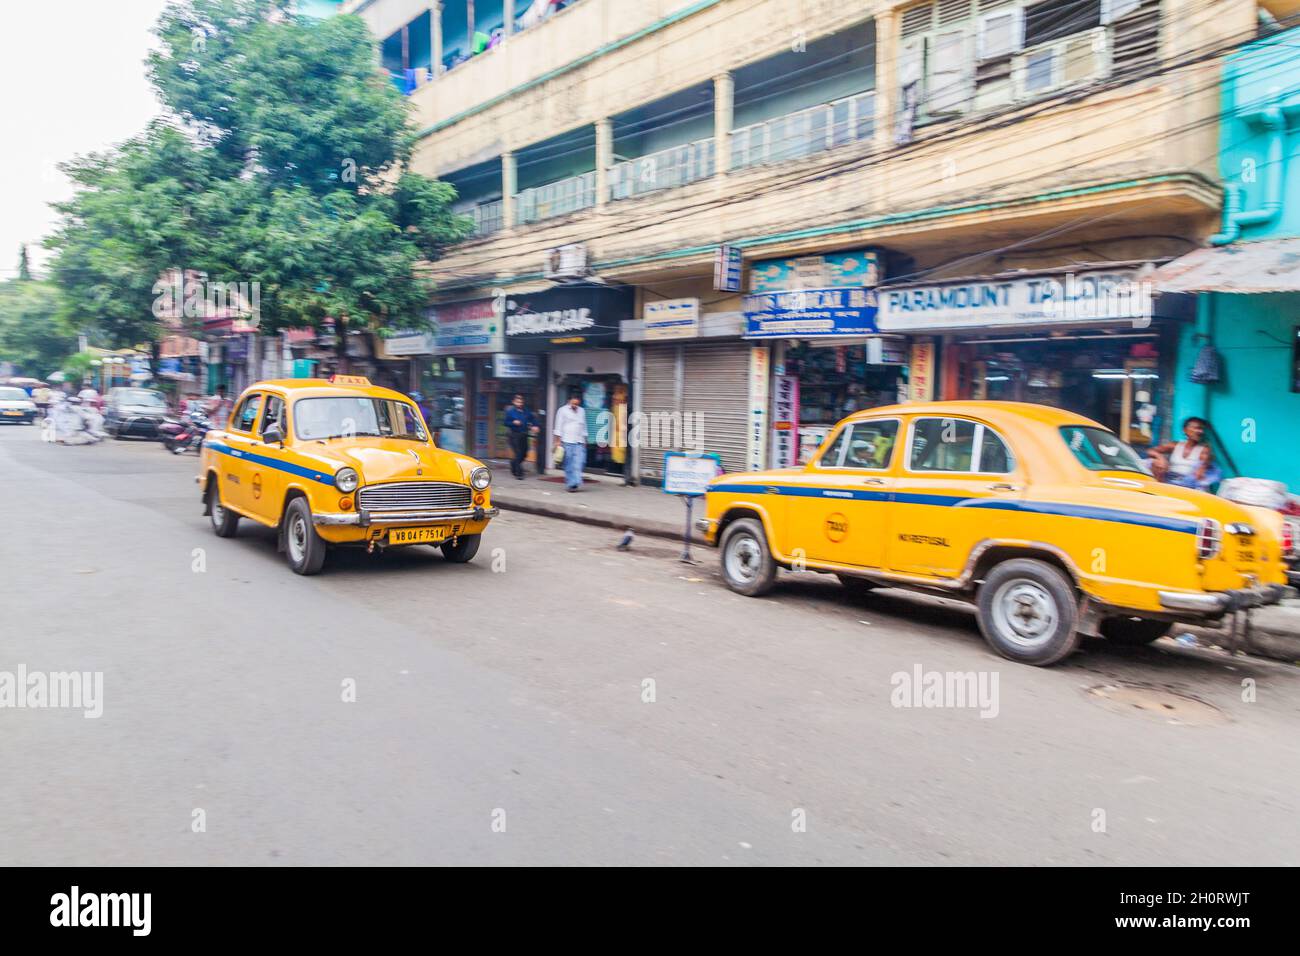 KOLKATA, INDIA - OCTOBER 27, 2016: View of yellow Hindustan Ambassador taxis in the center of Kolkata, India Stock Photo